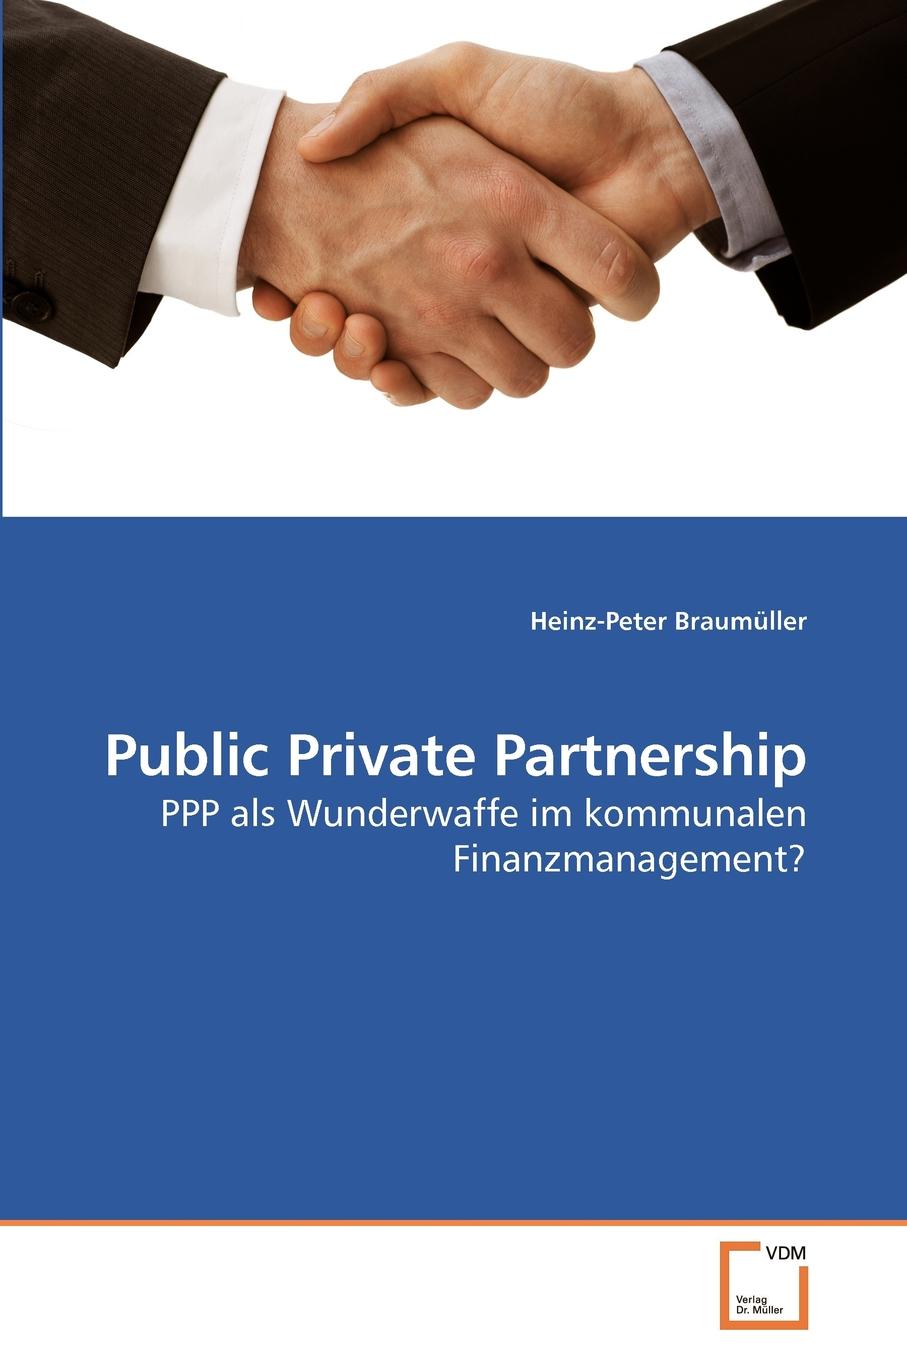 Public private partnership. Public private partnerships. PPP partnerships Shvetsiya.